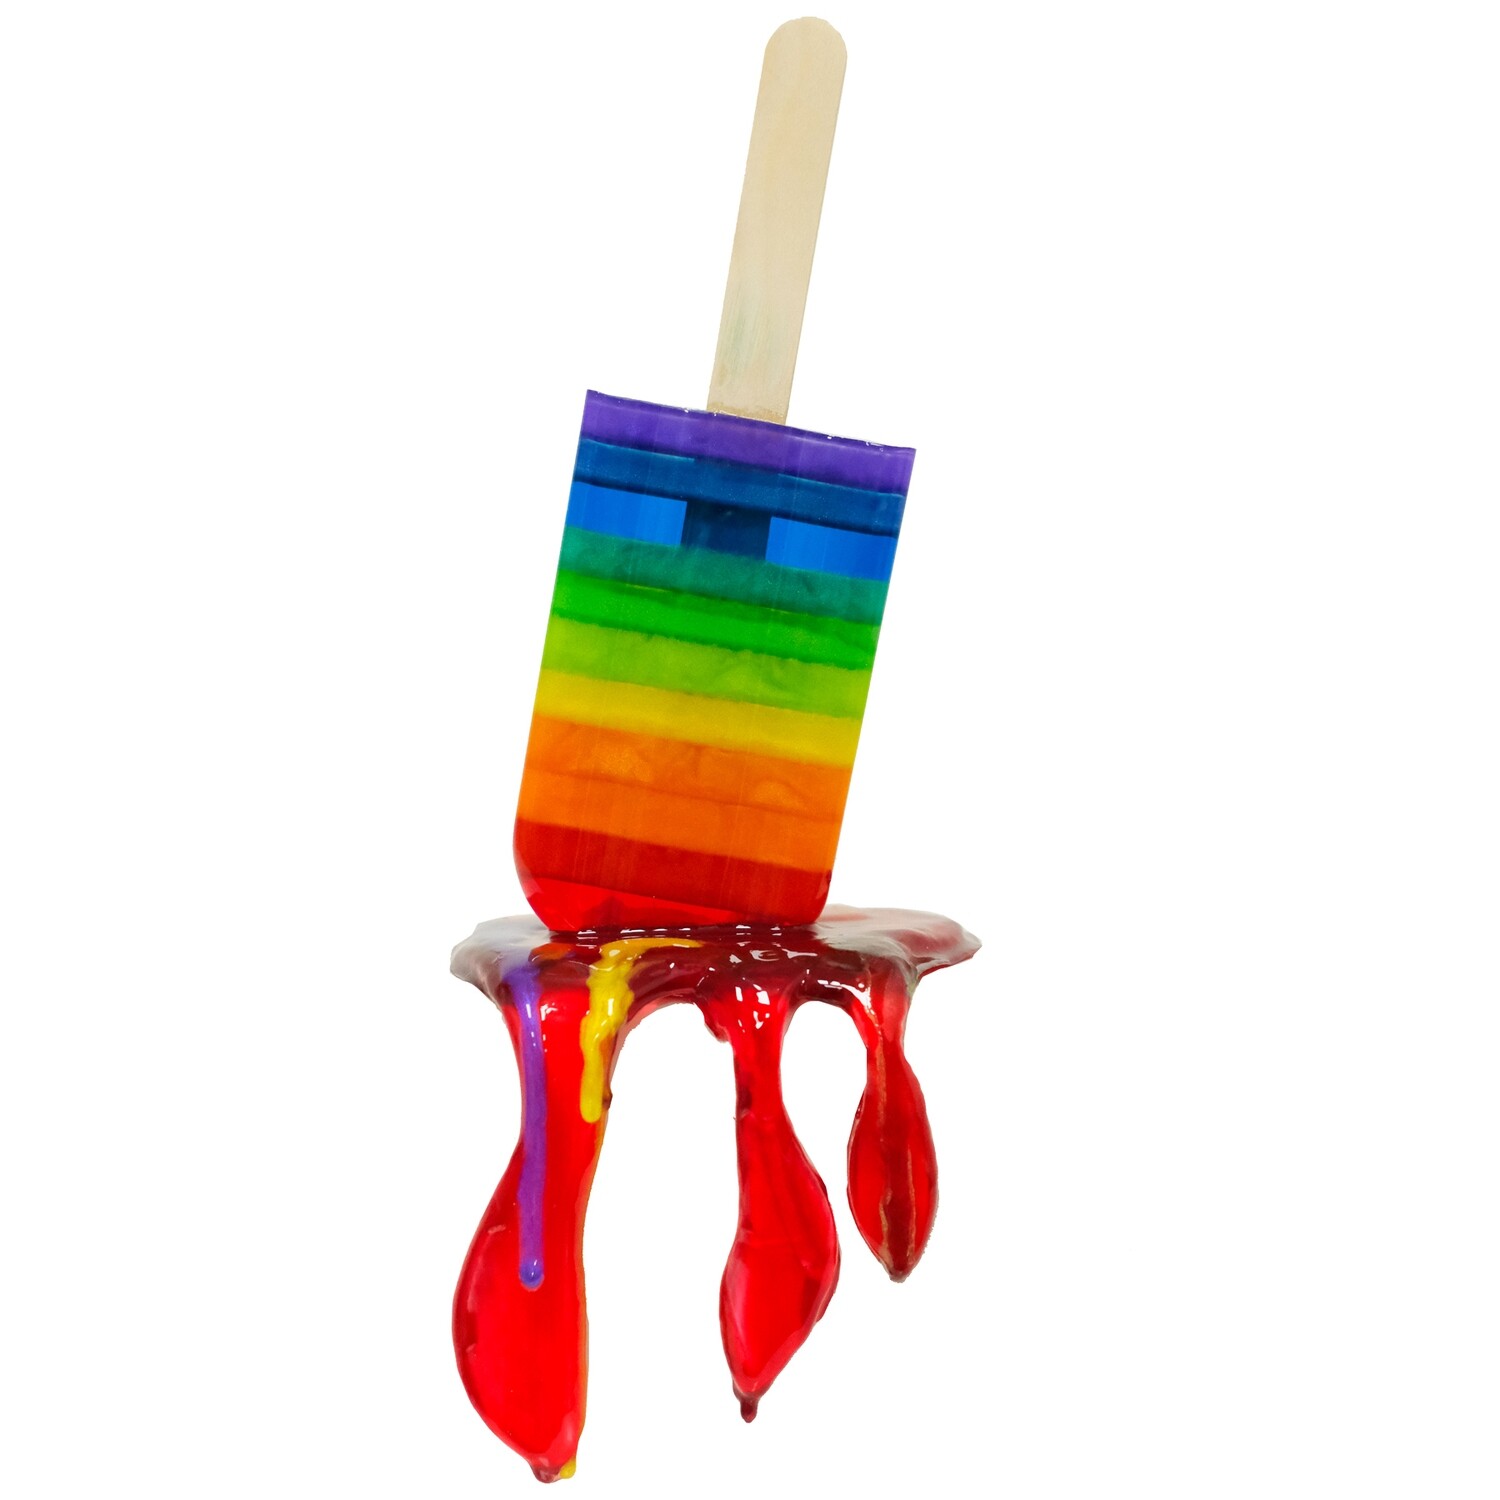 Melting Popsicle Art - Big Double Rainbow Shelfie - Original Melting Pops